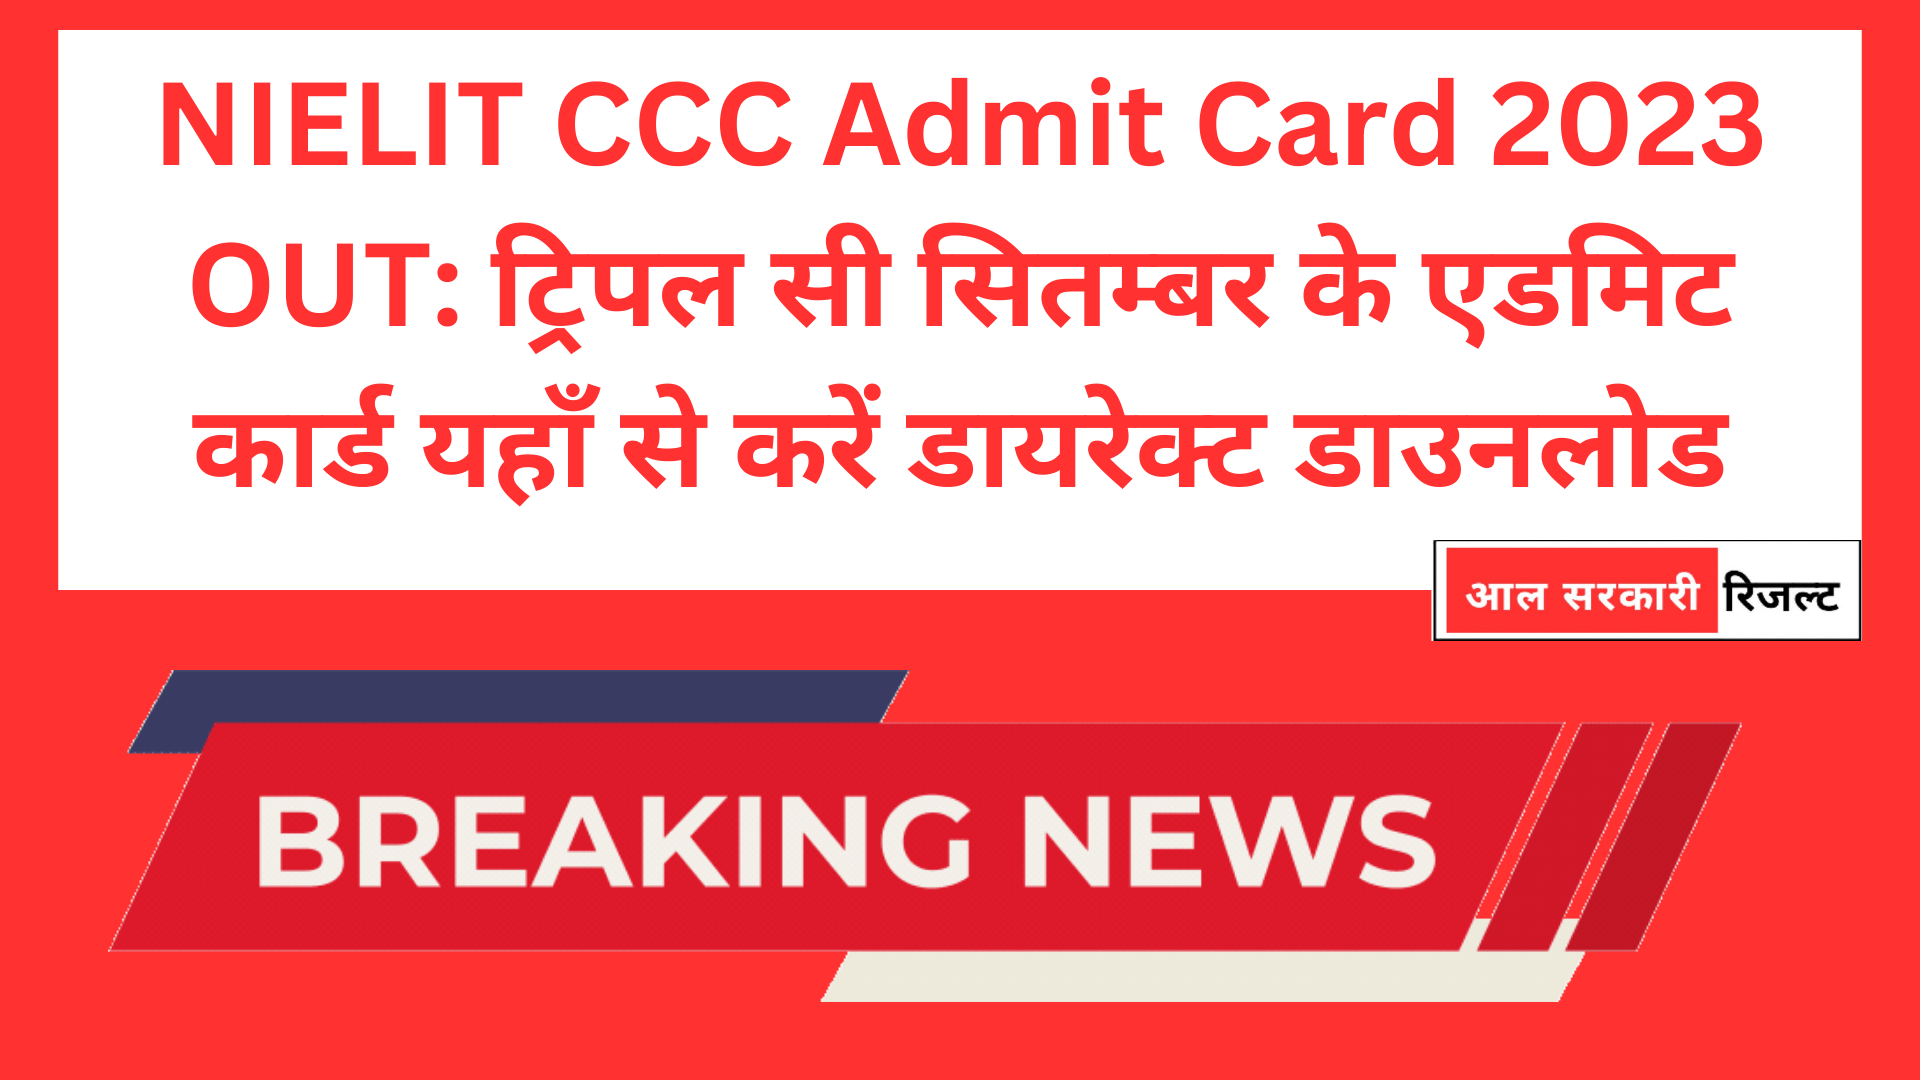 NIELIT CCC Admit Card 2023 नाइलिट सीसीसी एडमिट कार्ड 2023